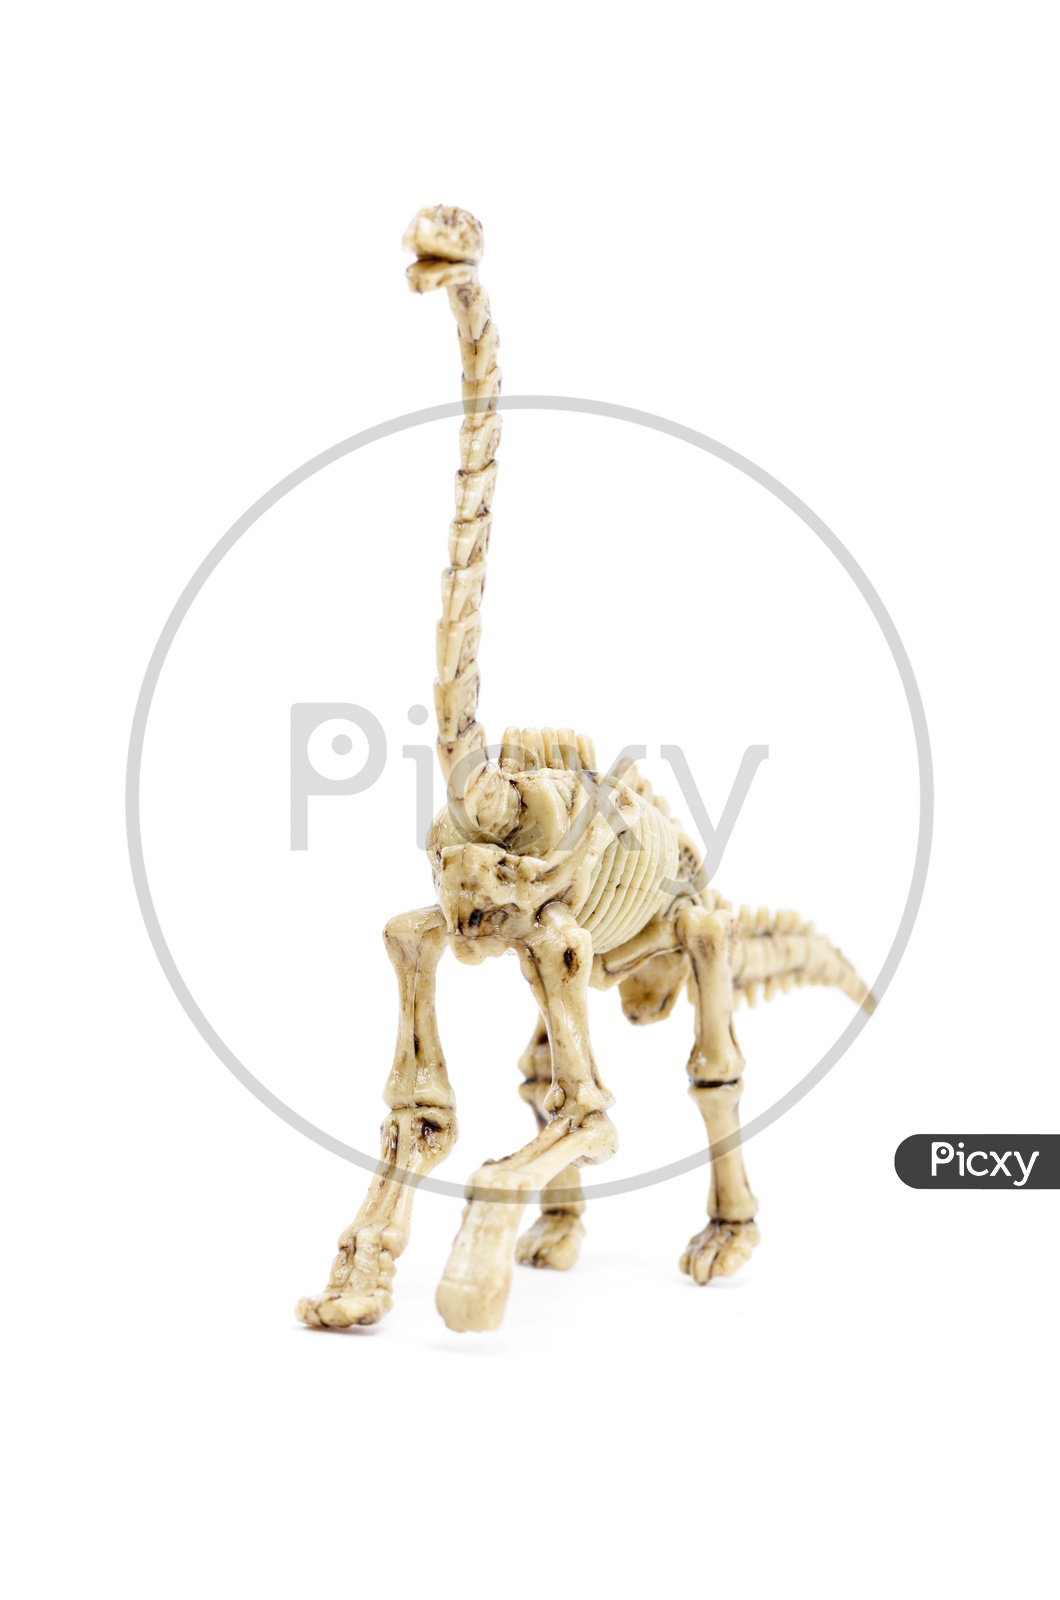 A Dinosaur skeleton